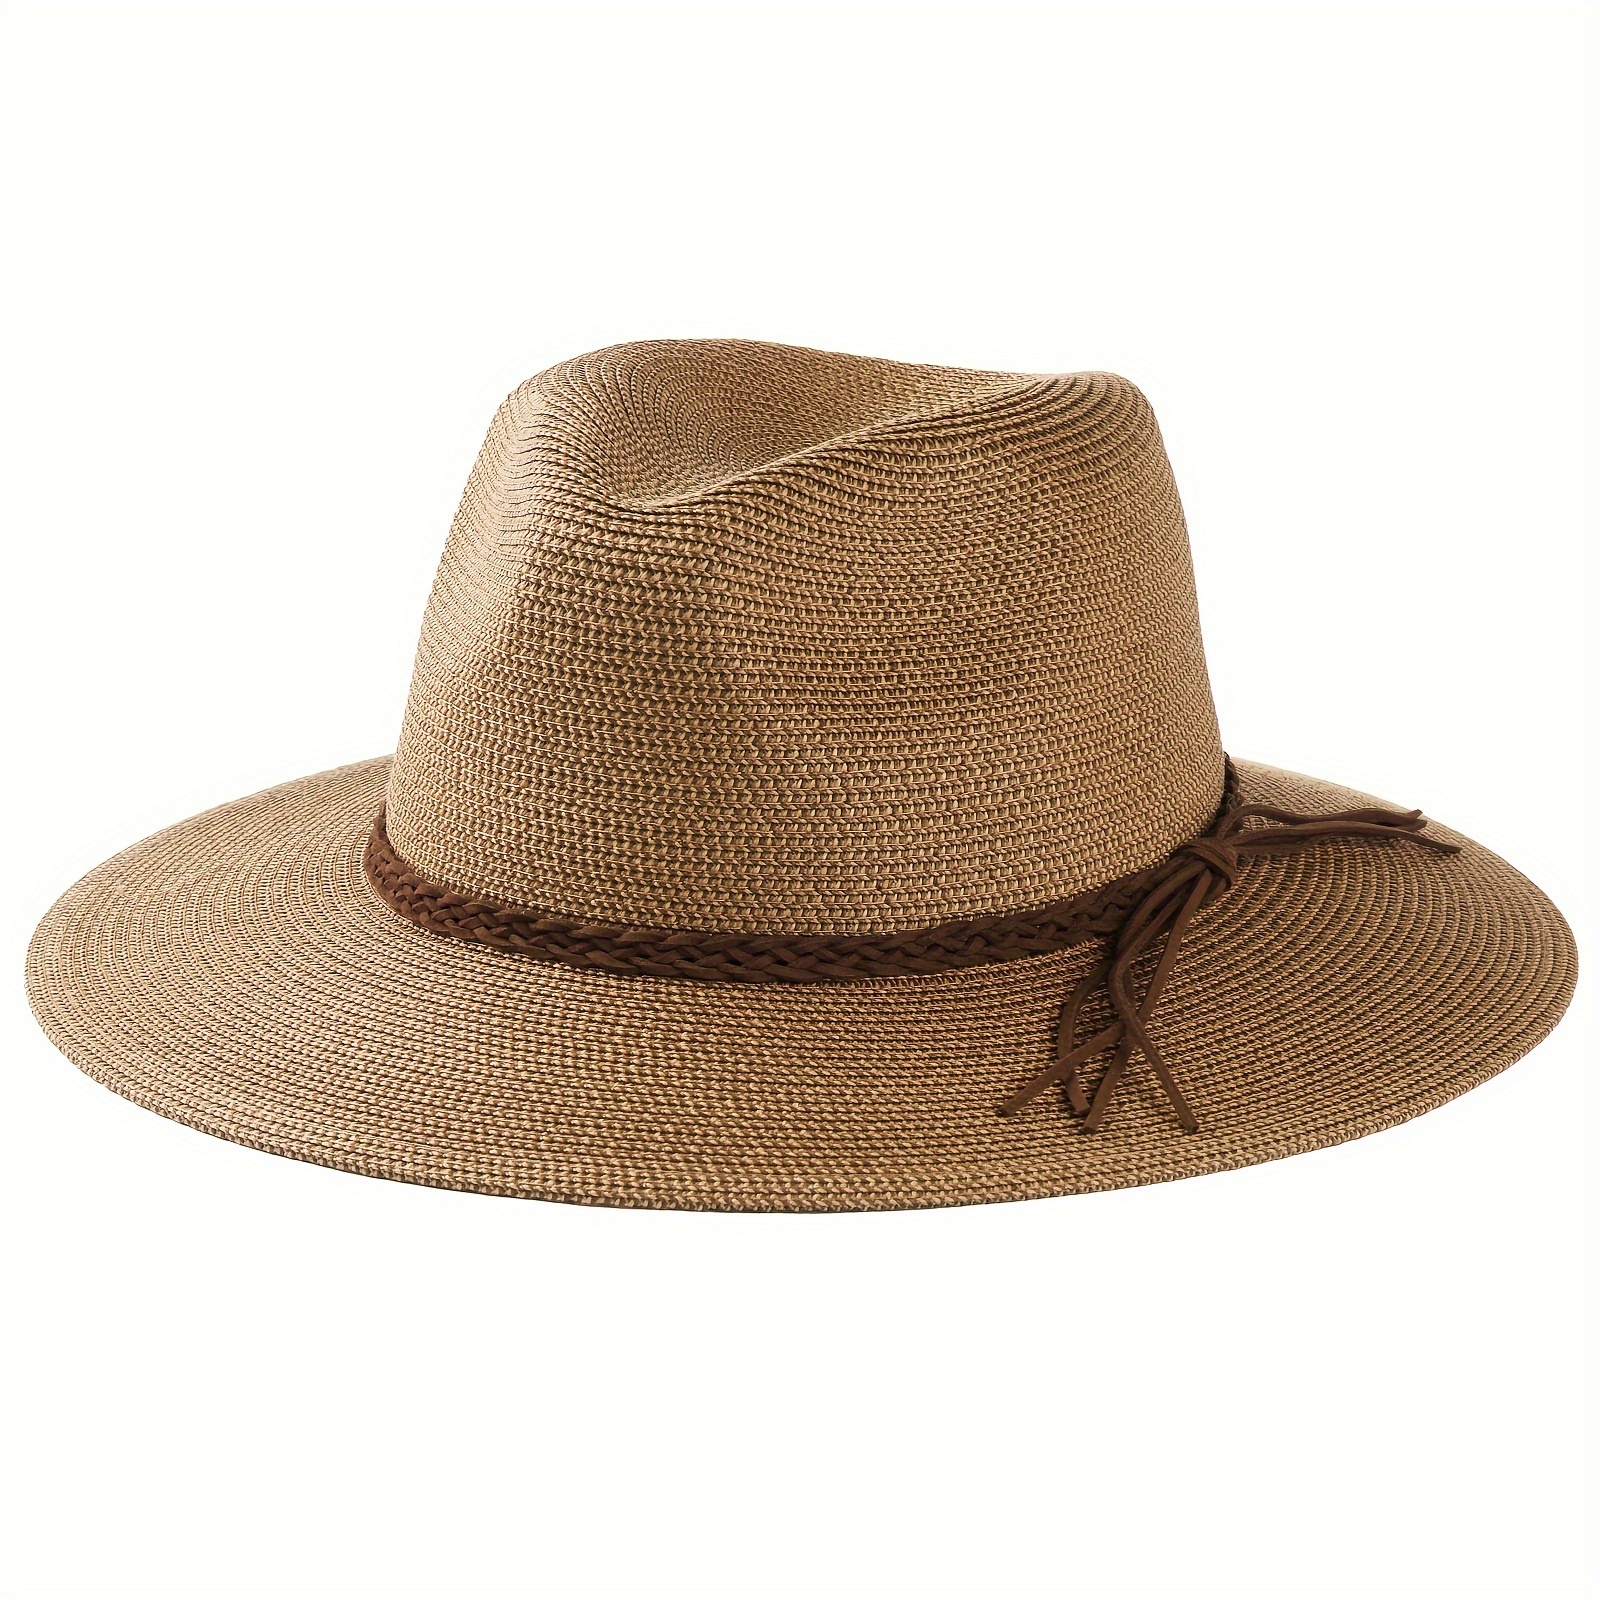 Lanzom Summer Beach Sun Hats for Men Women Foldable Floppy Travel Packable Staw Hat, Wide Brim Hat